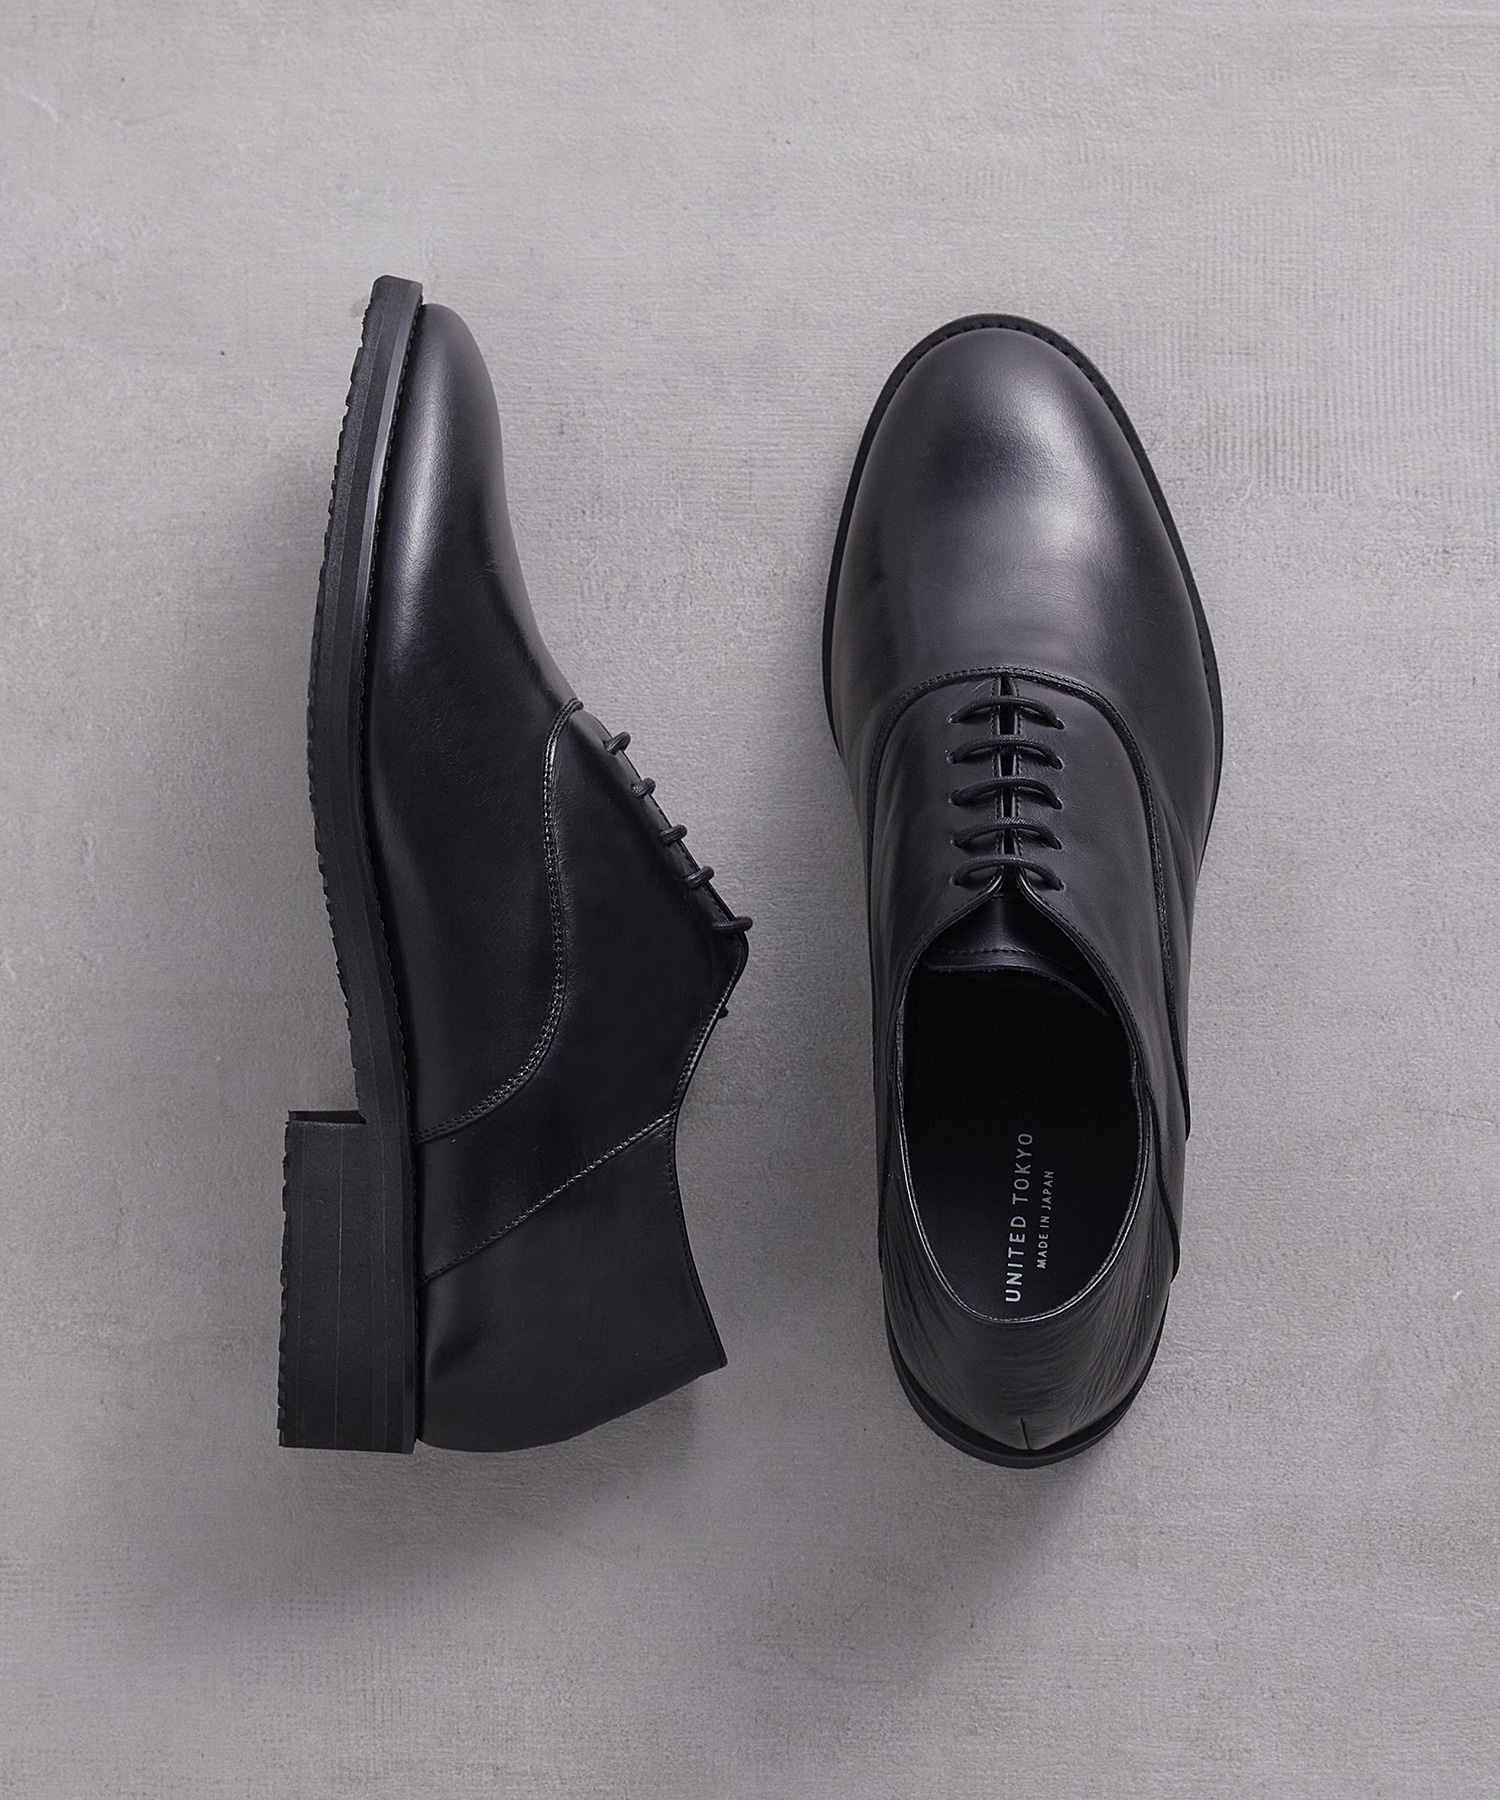 UNITED TOKYO 黒レザーシューズ (税込) - 靴